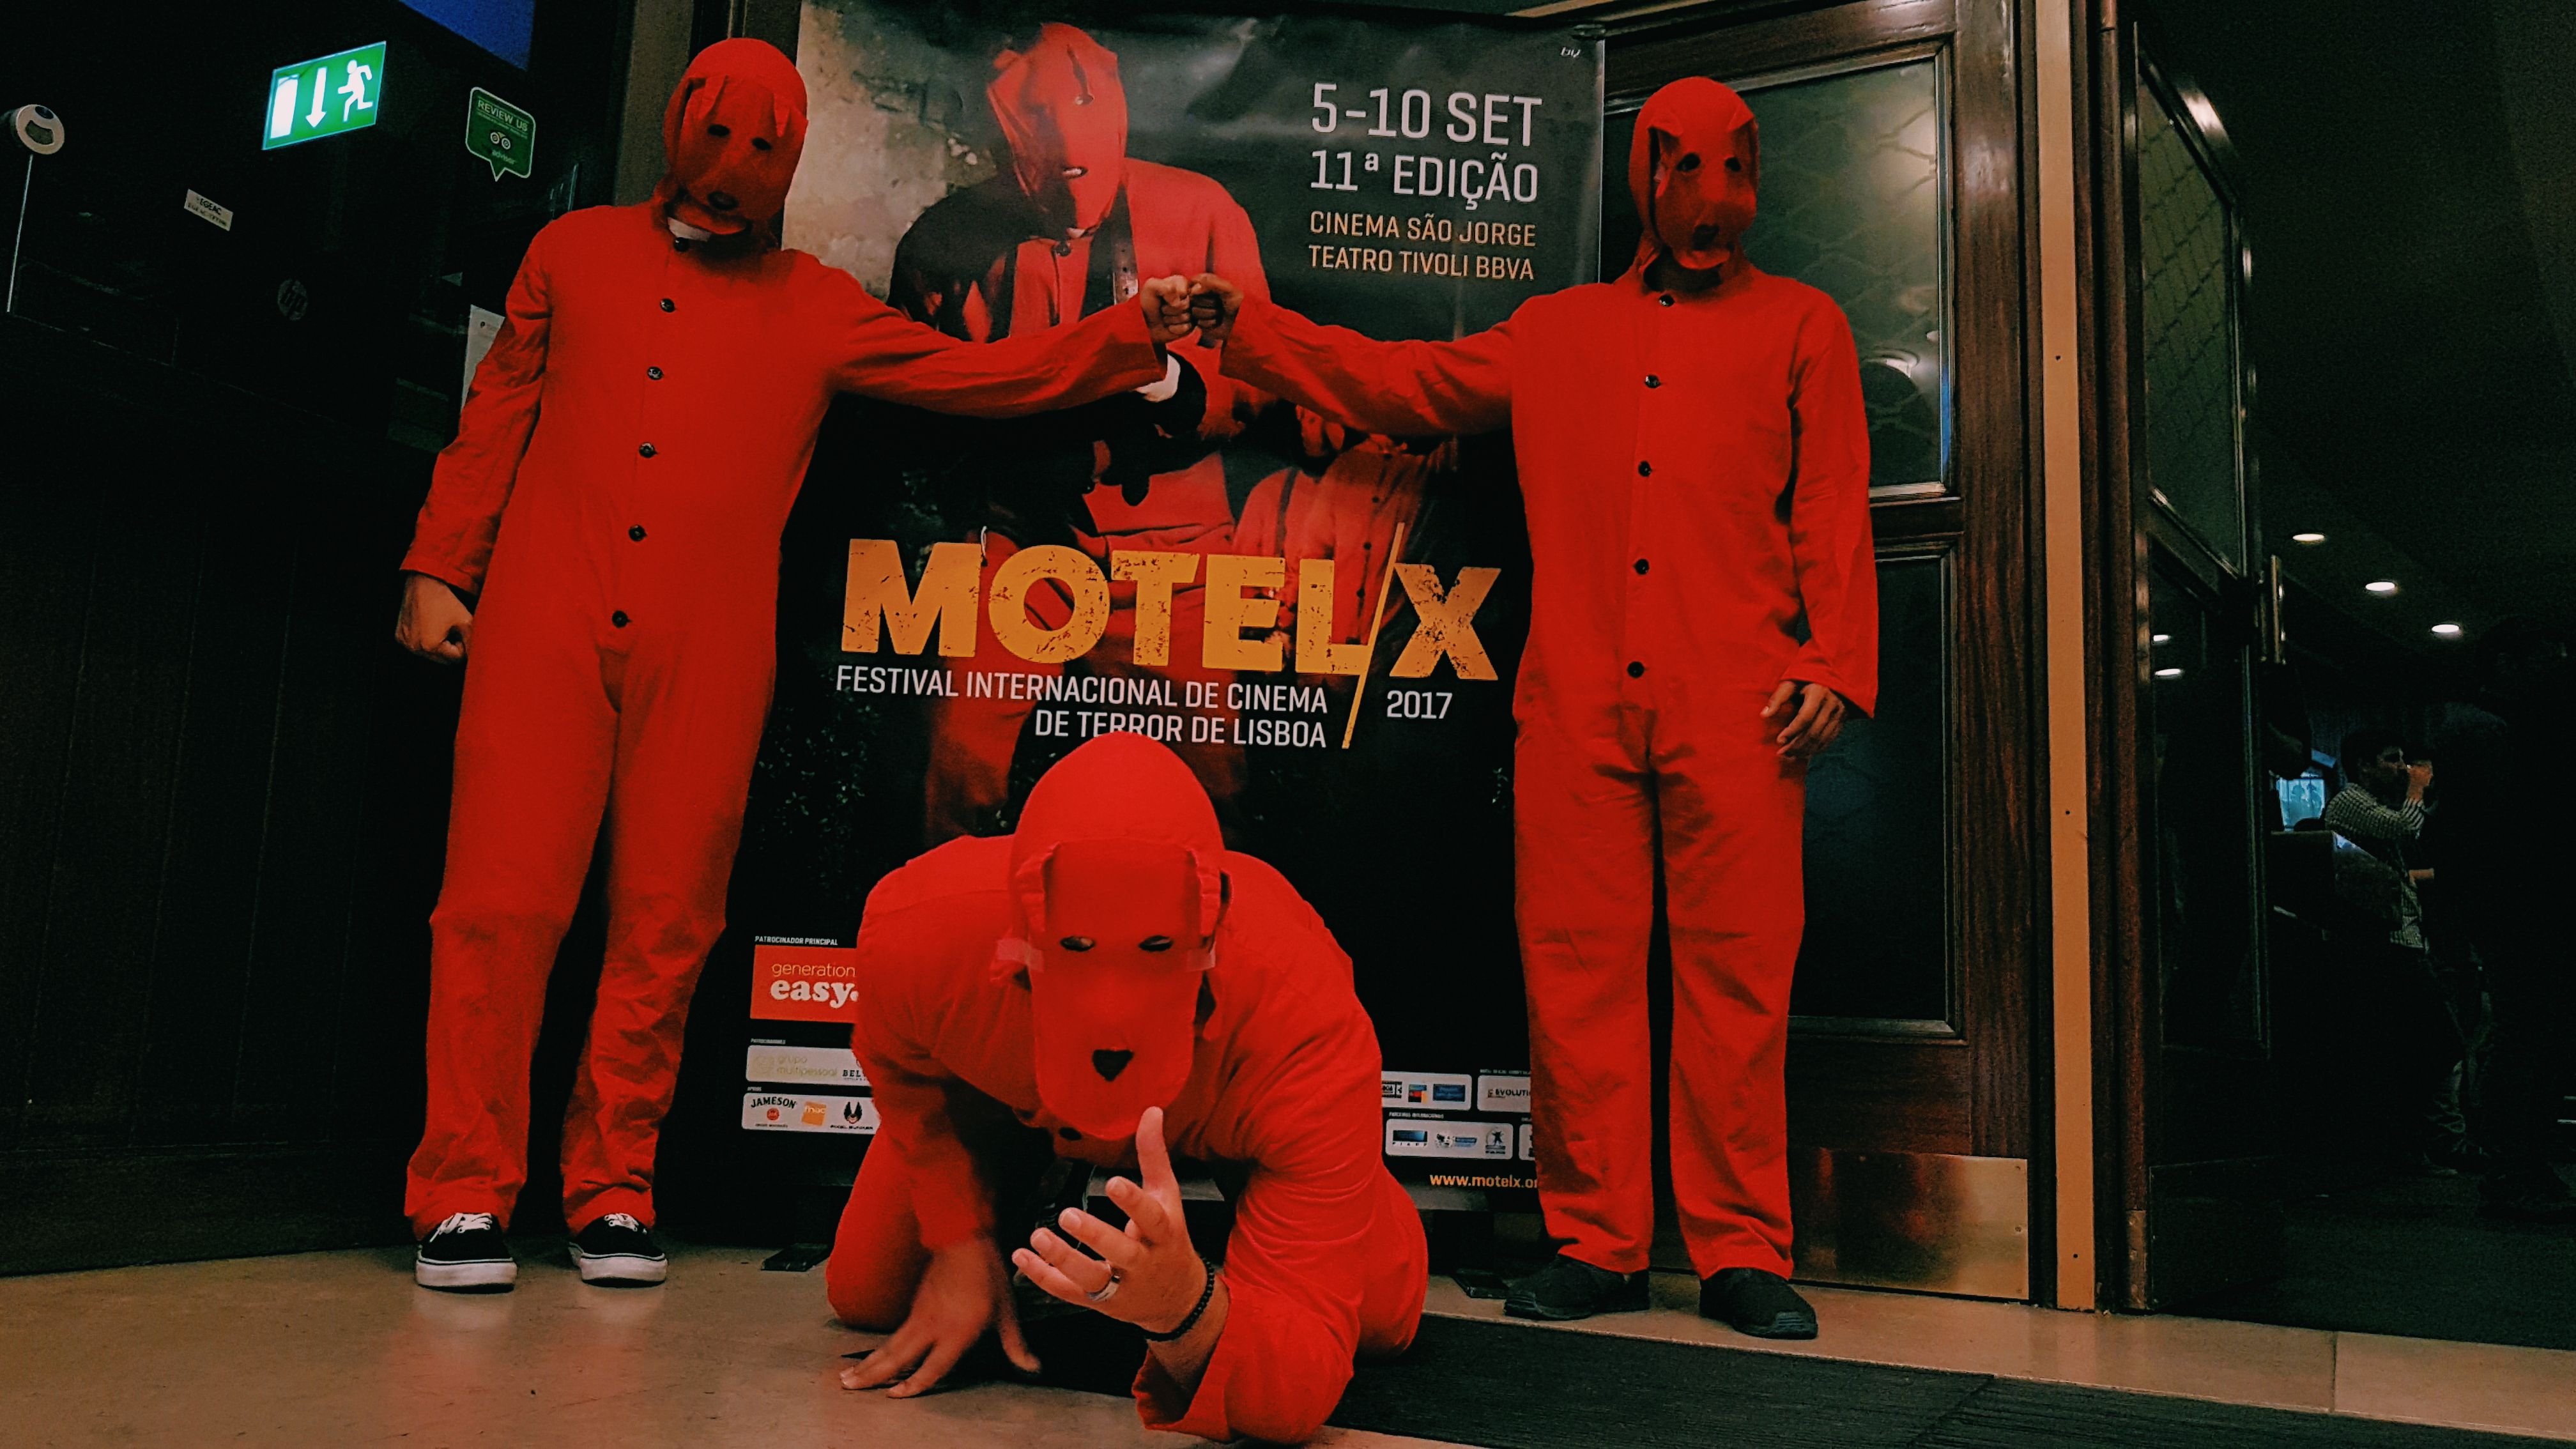 motelx 2017 34